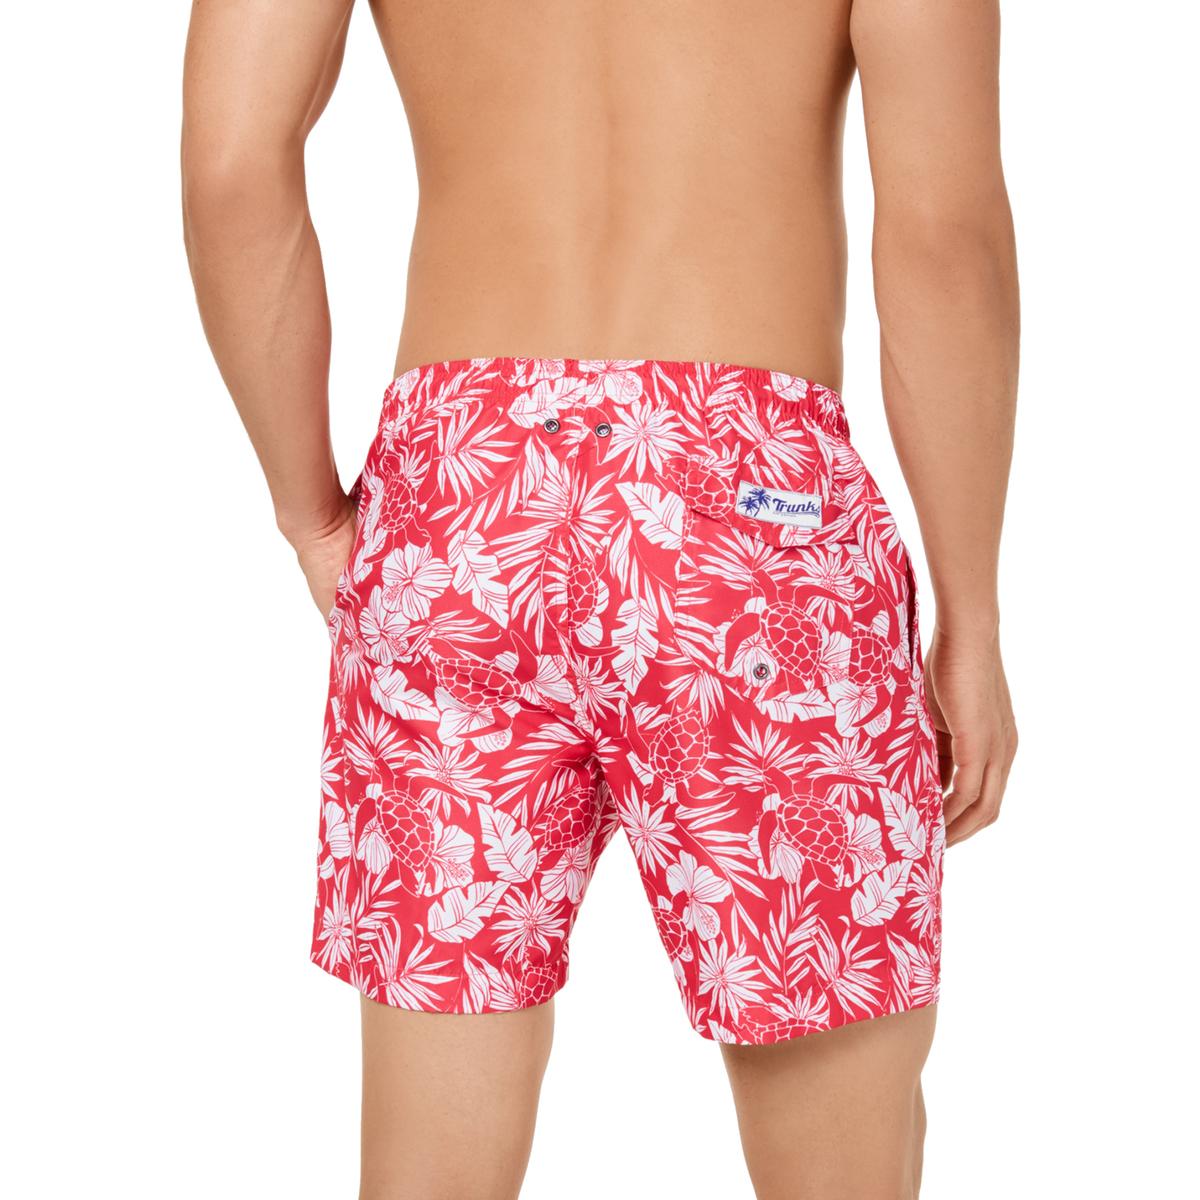 Trunks Mens Pink Floral Board Shorts Beachwear Swim Trunks XXL BHFO ...